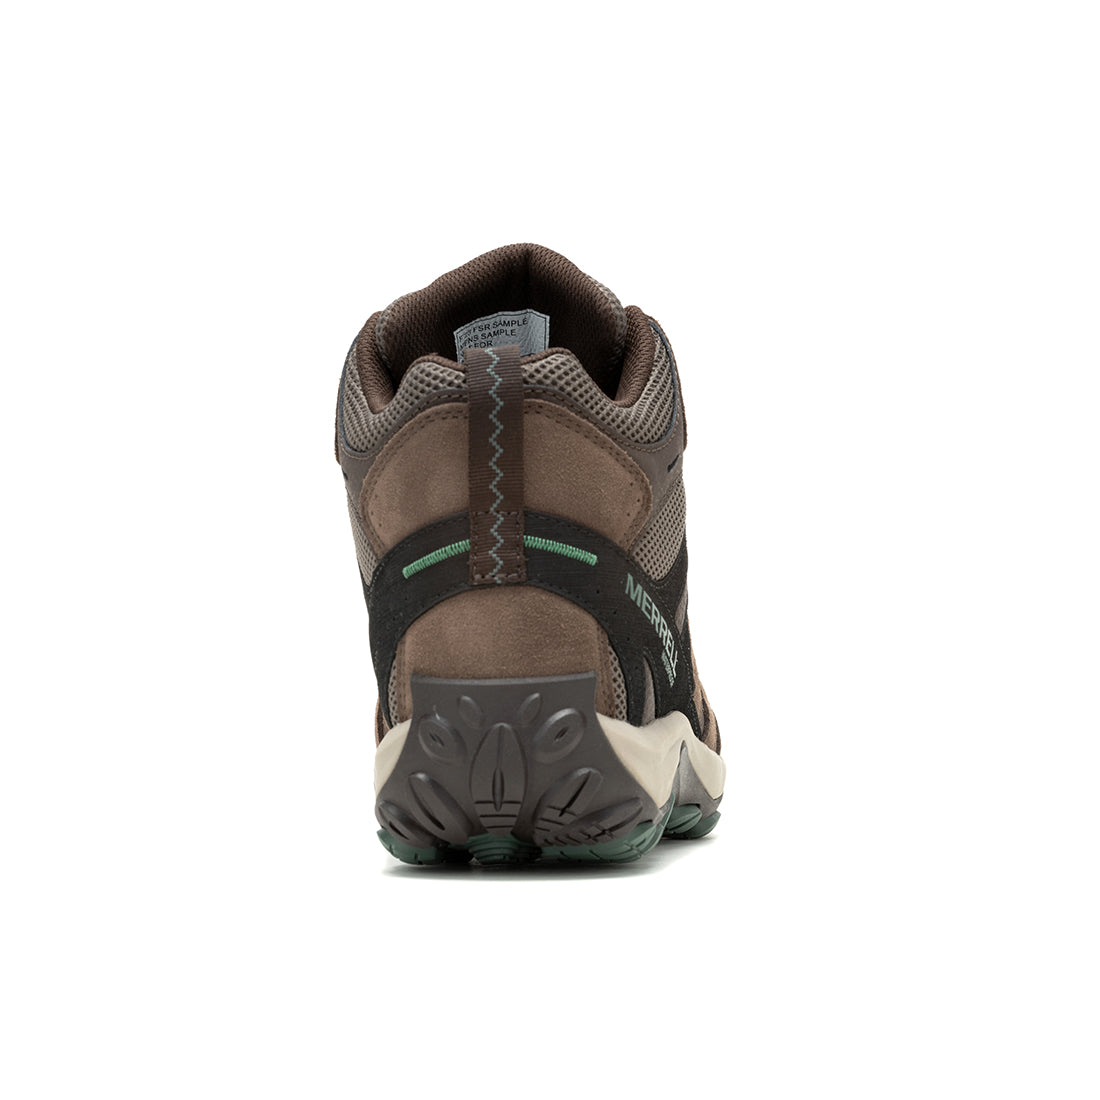 Accentor 3 Mid Waterproof - Bracken Mens Hiking Shoes-4